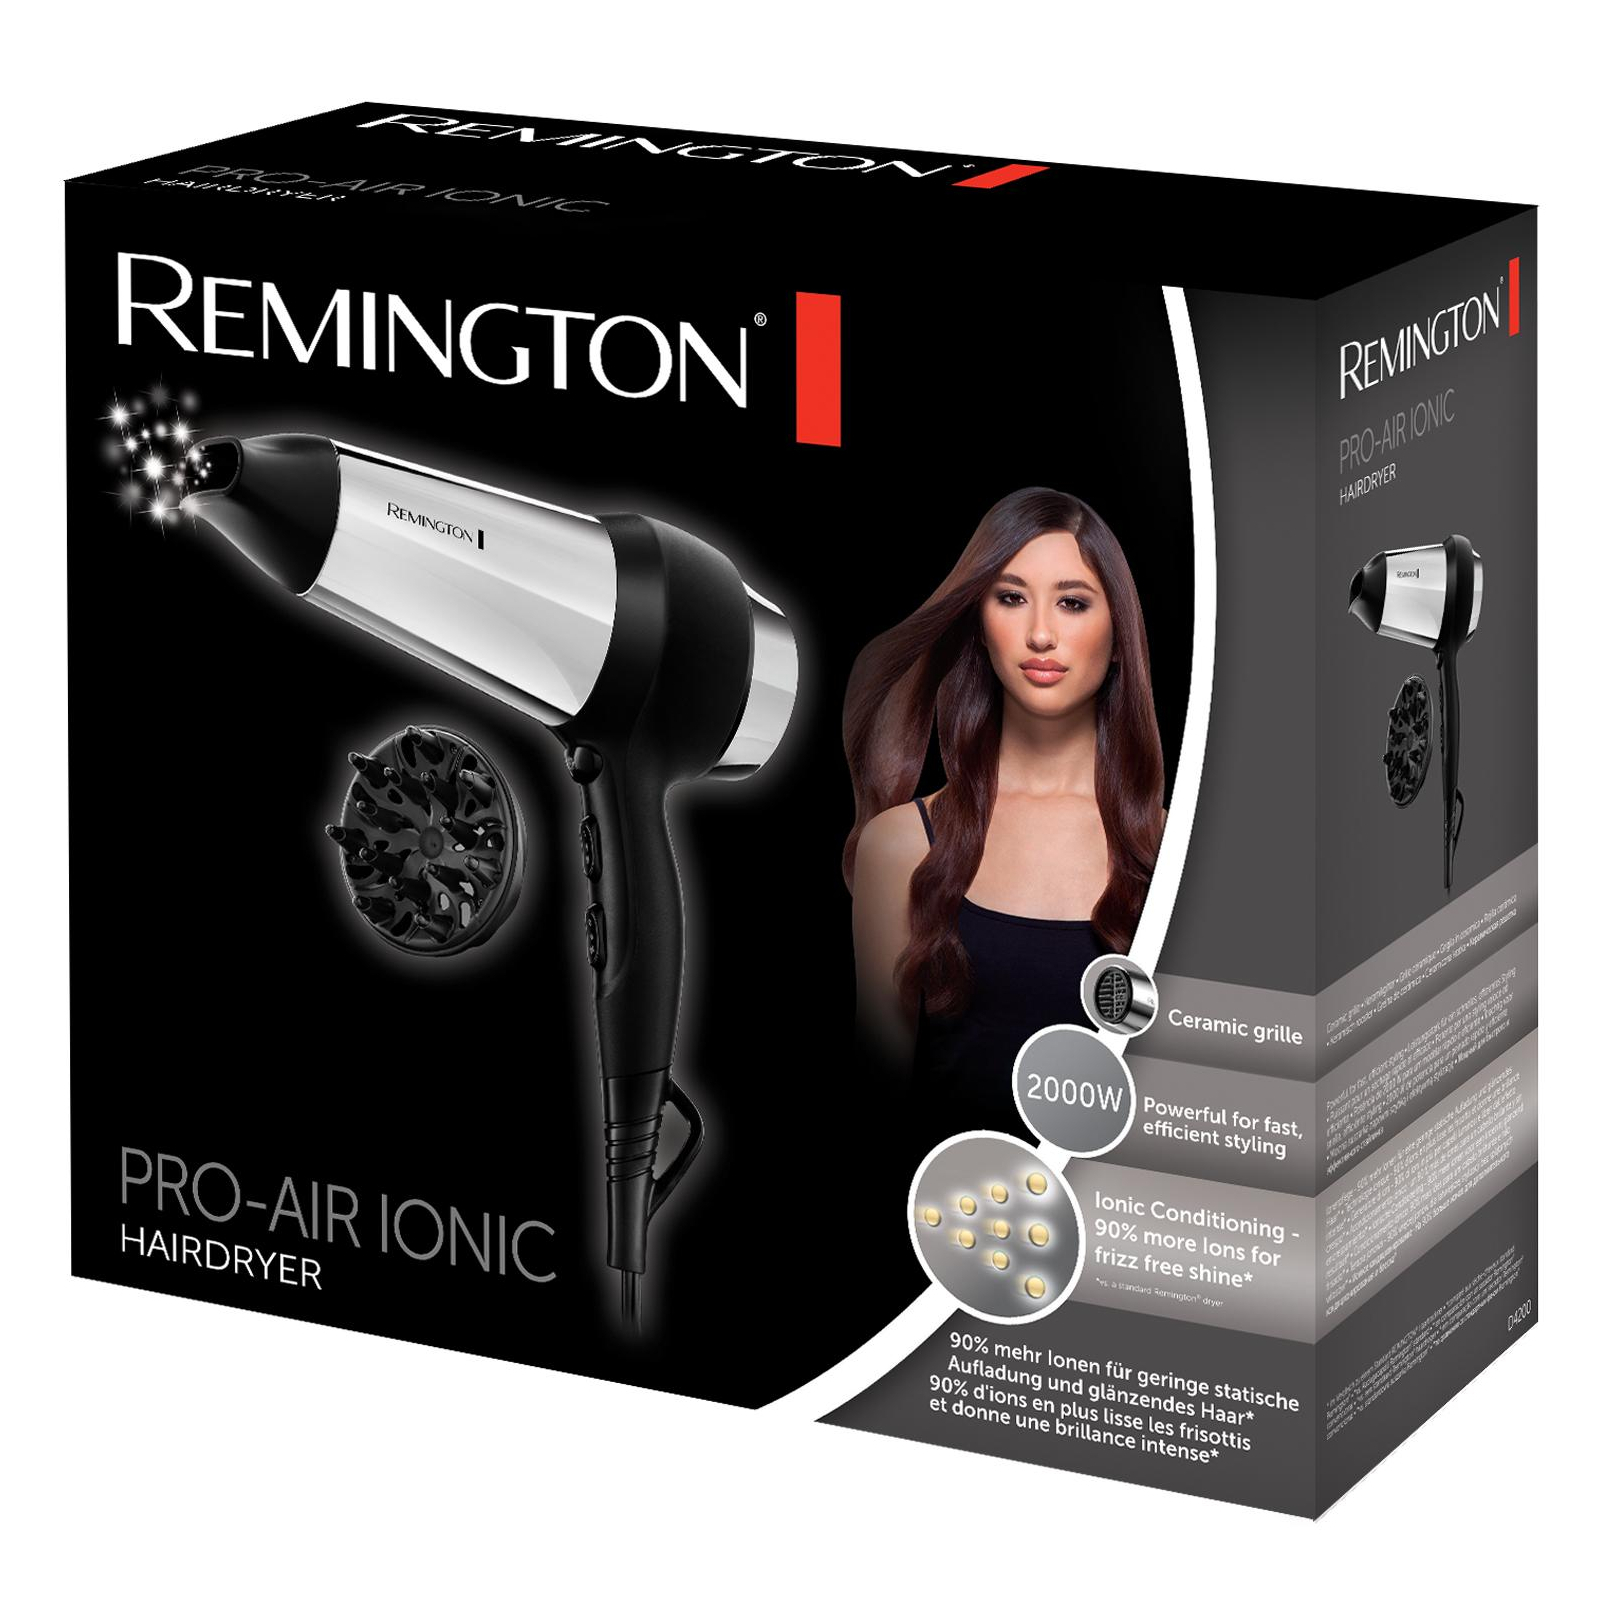 Фен Remington Pro-Air Ionic (D4200) изображение 5